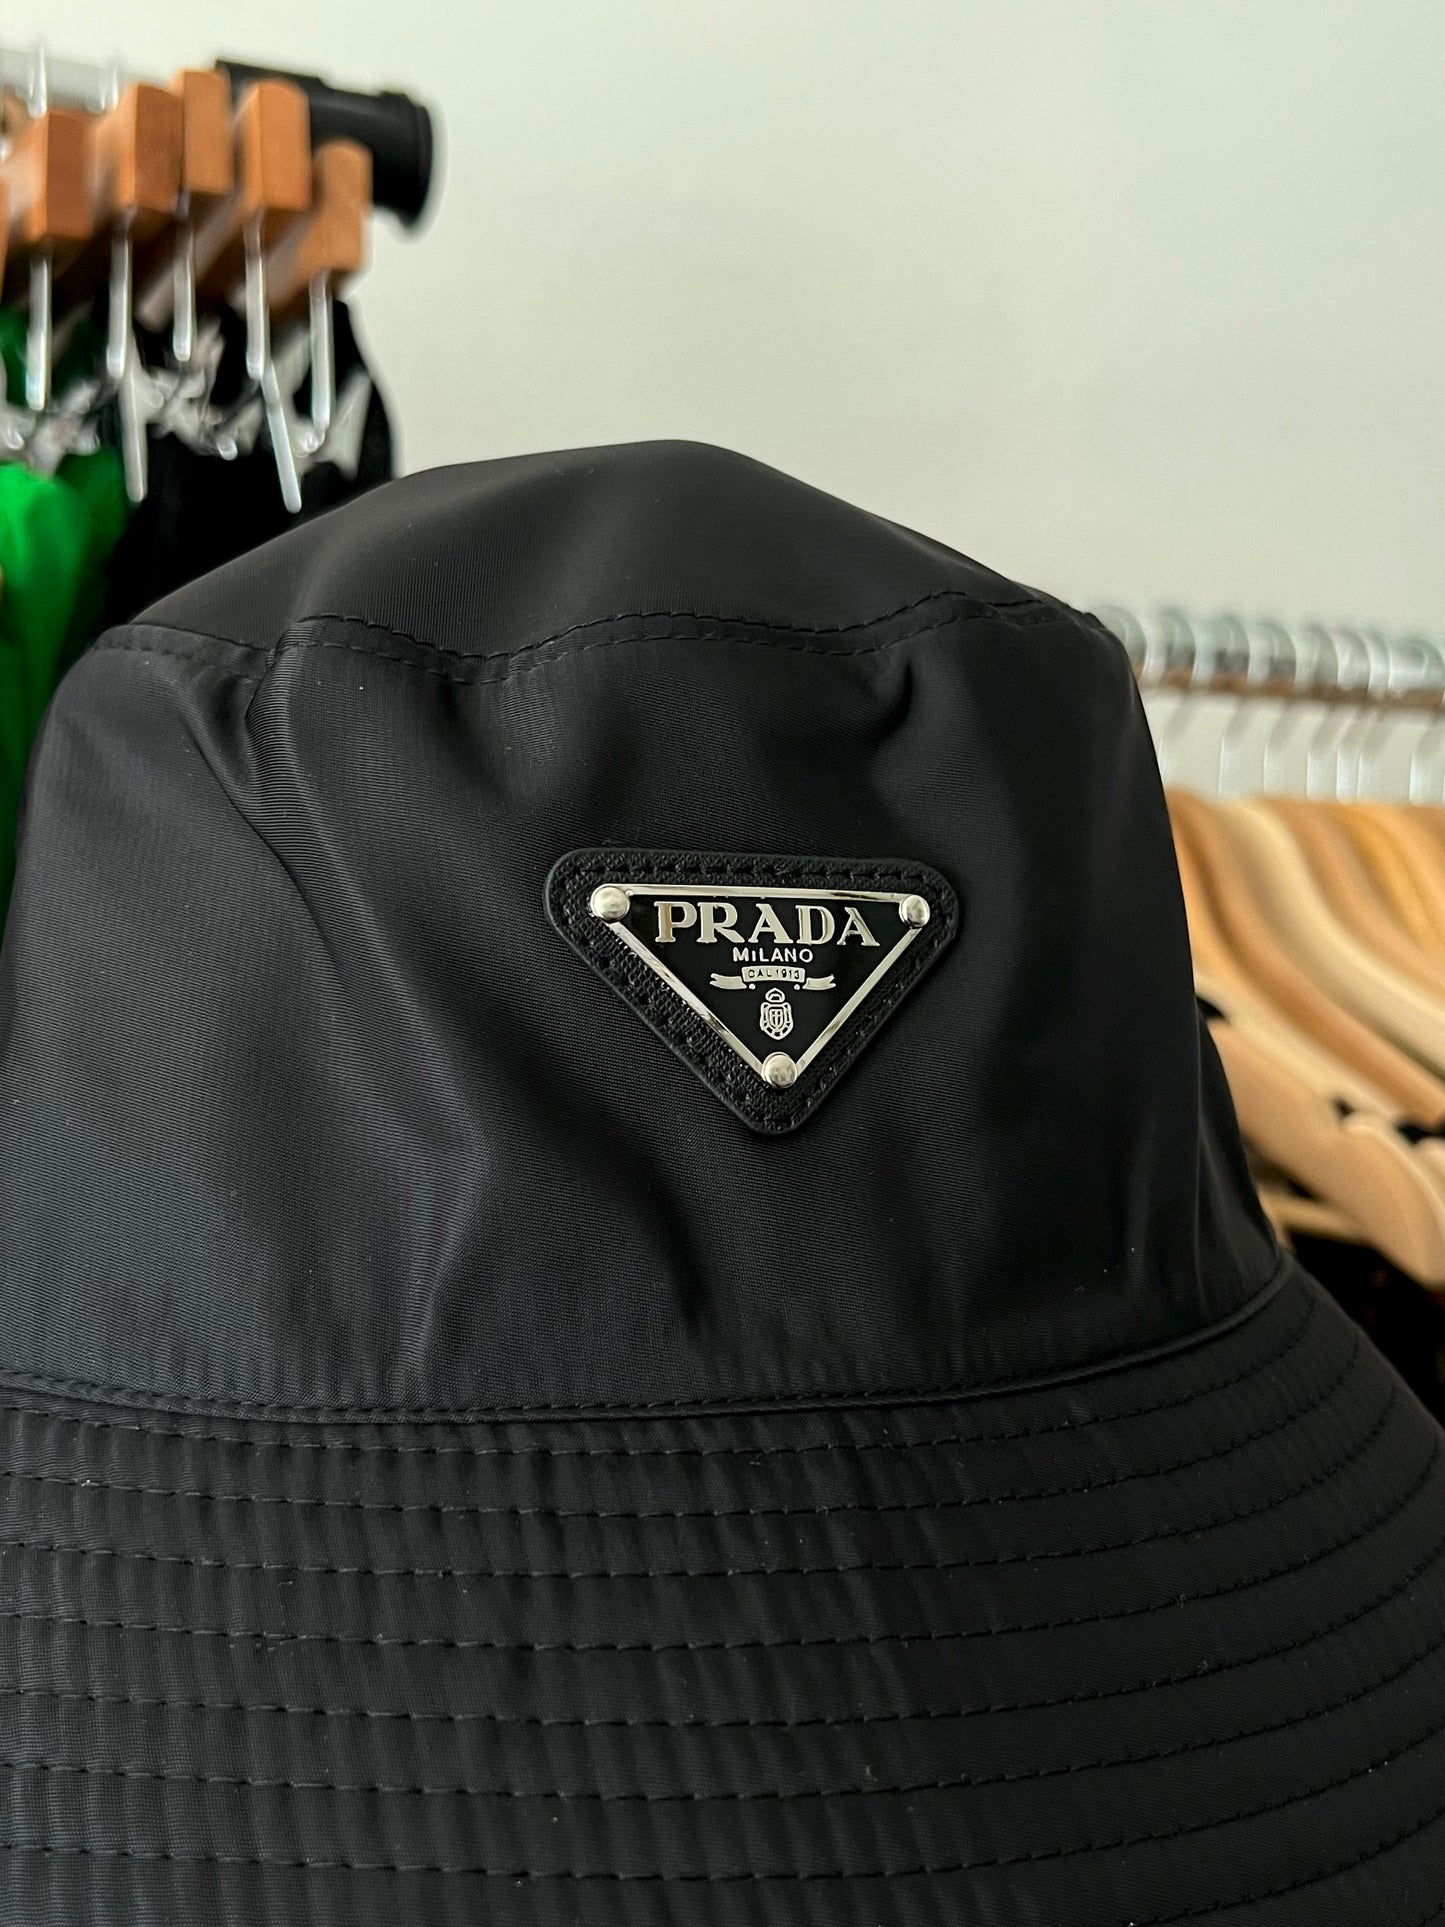 "Prada" bucket hat